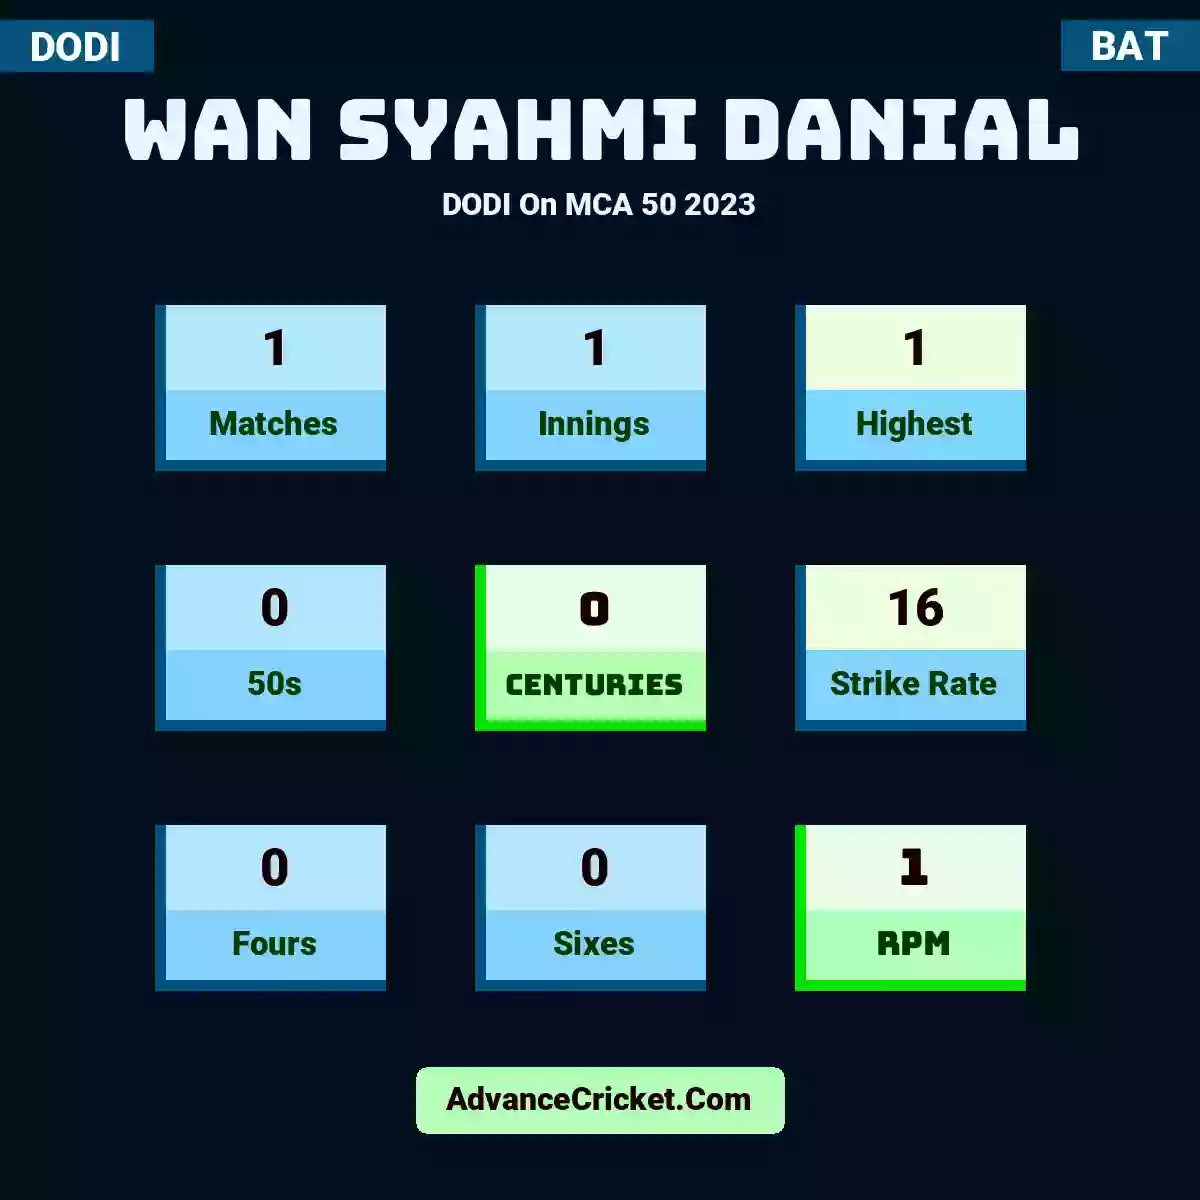 Wan Syahmi Danial DODI  On MCA 50 2023, Wan Syahmi Danial played 1 matches, scored 1 runs as highest, 0 half-centuries, and 0 centuries, with a strike rate of 16. W.Syahmi.Danial hit 0 fours and 0 sixes, with an RPM of 1.